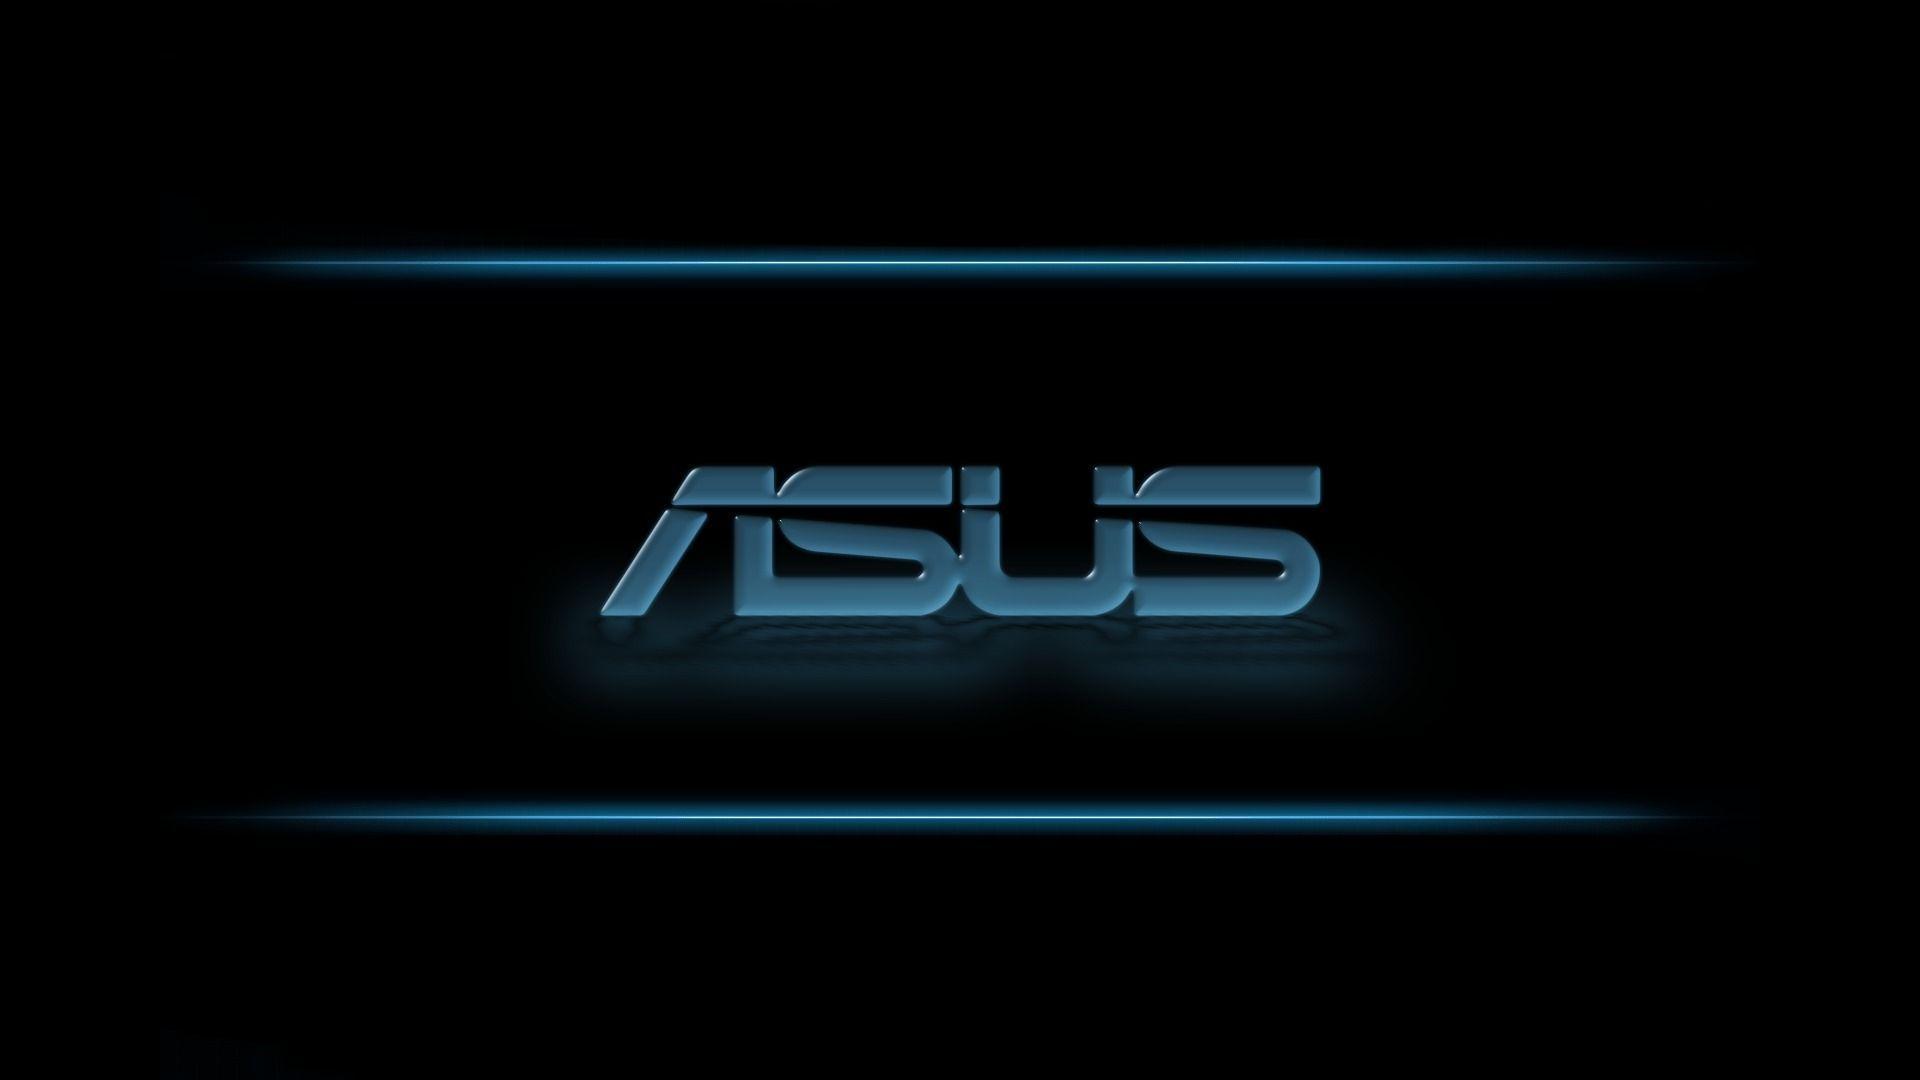 Asus 3D Logo Desktop Wallpaper 1163 HD Wallpaper. Feewall